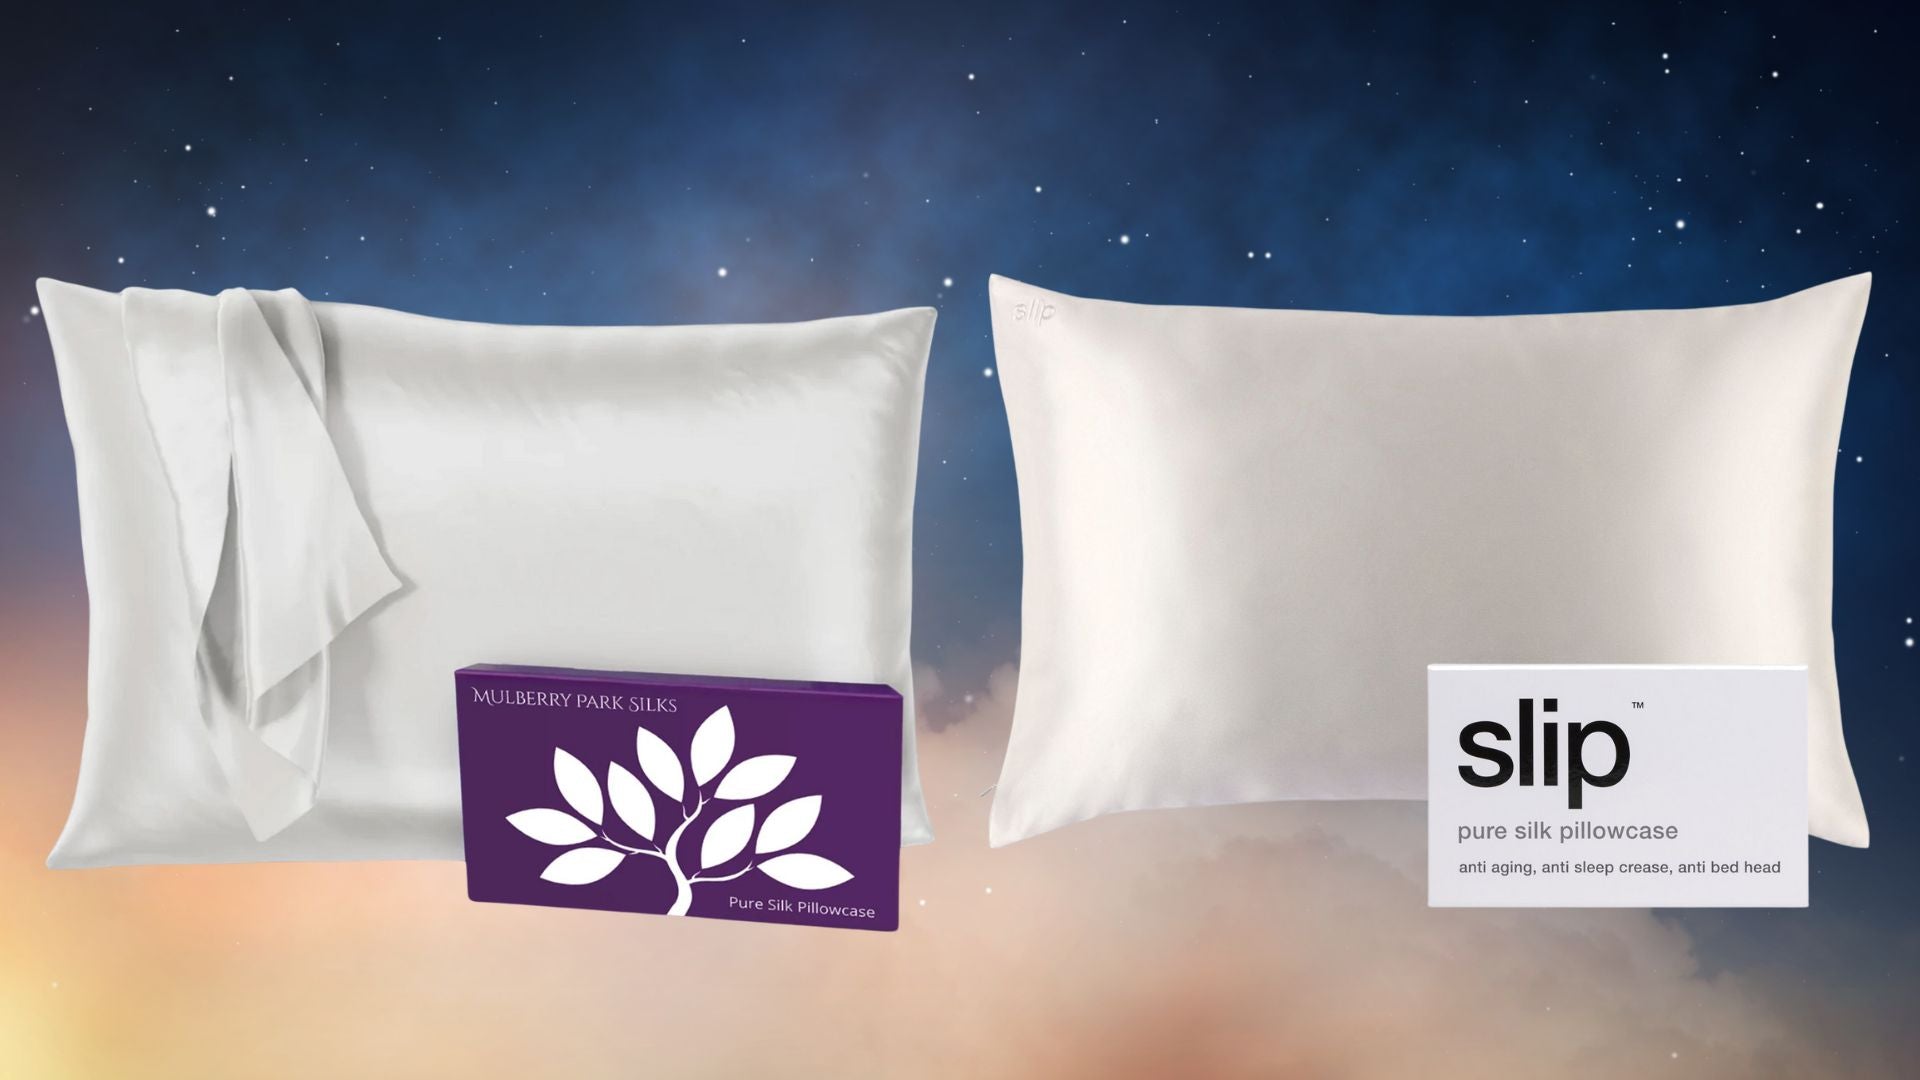 Silk Pillowcase Product Review: Mulberry Park Silks vs. Slip